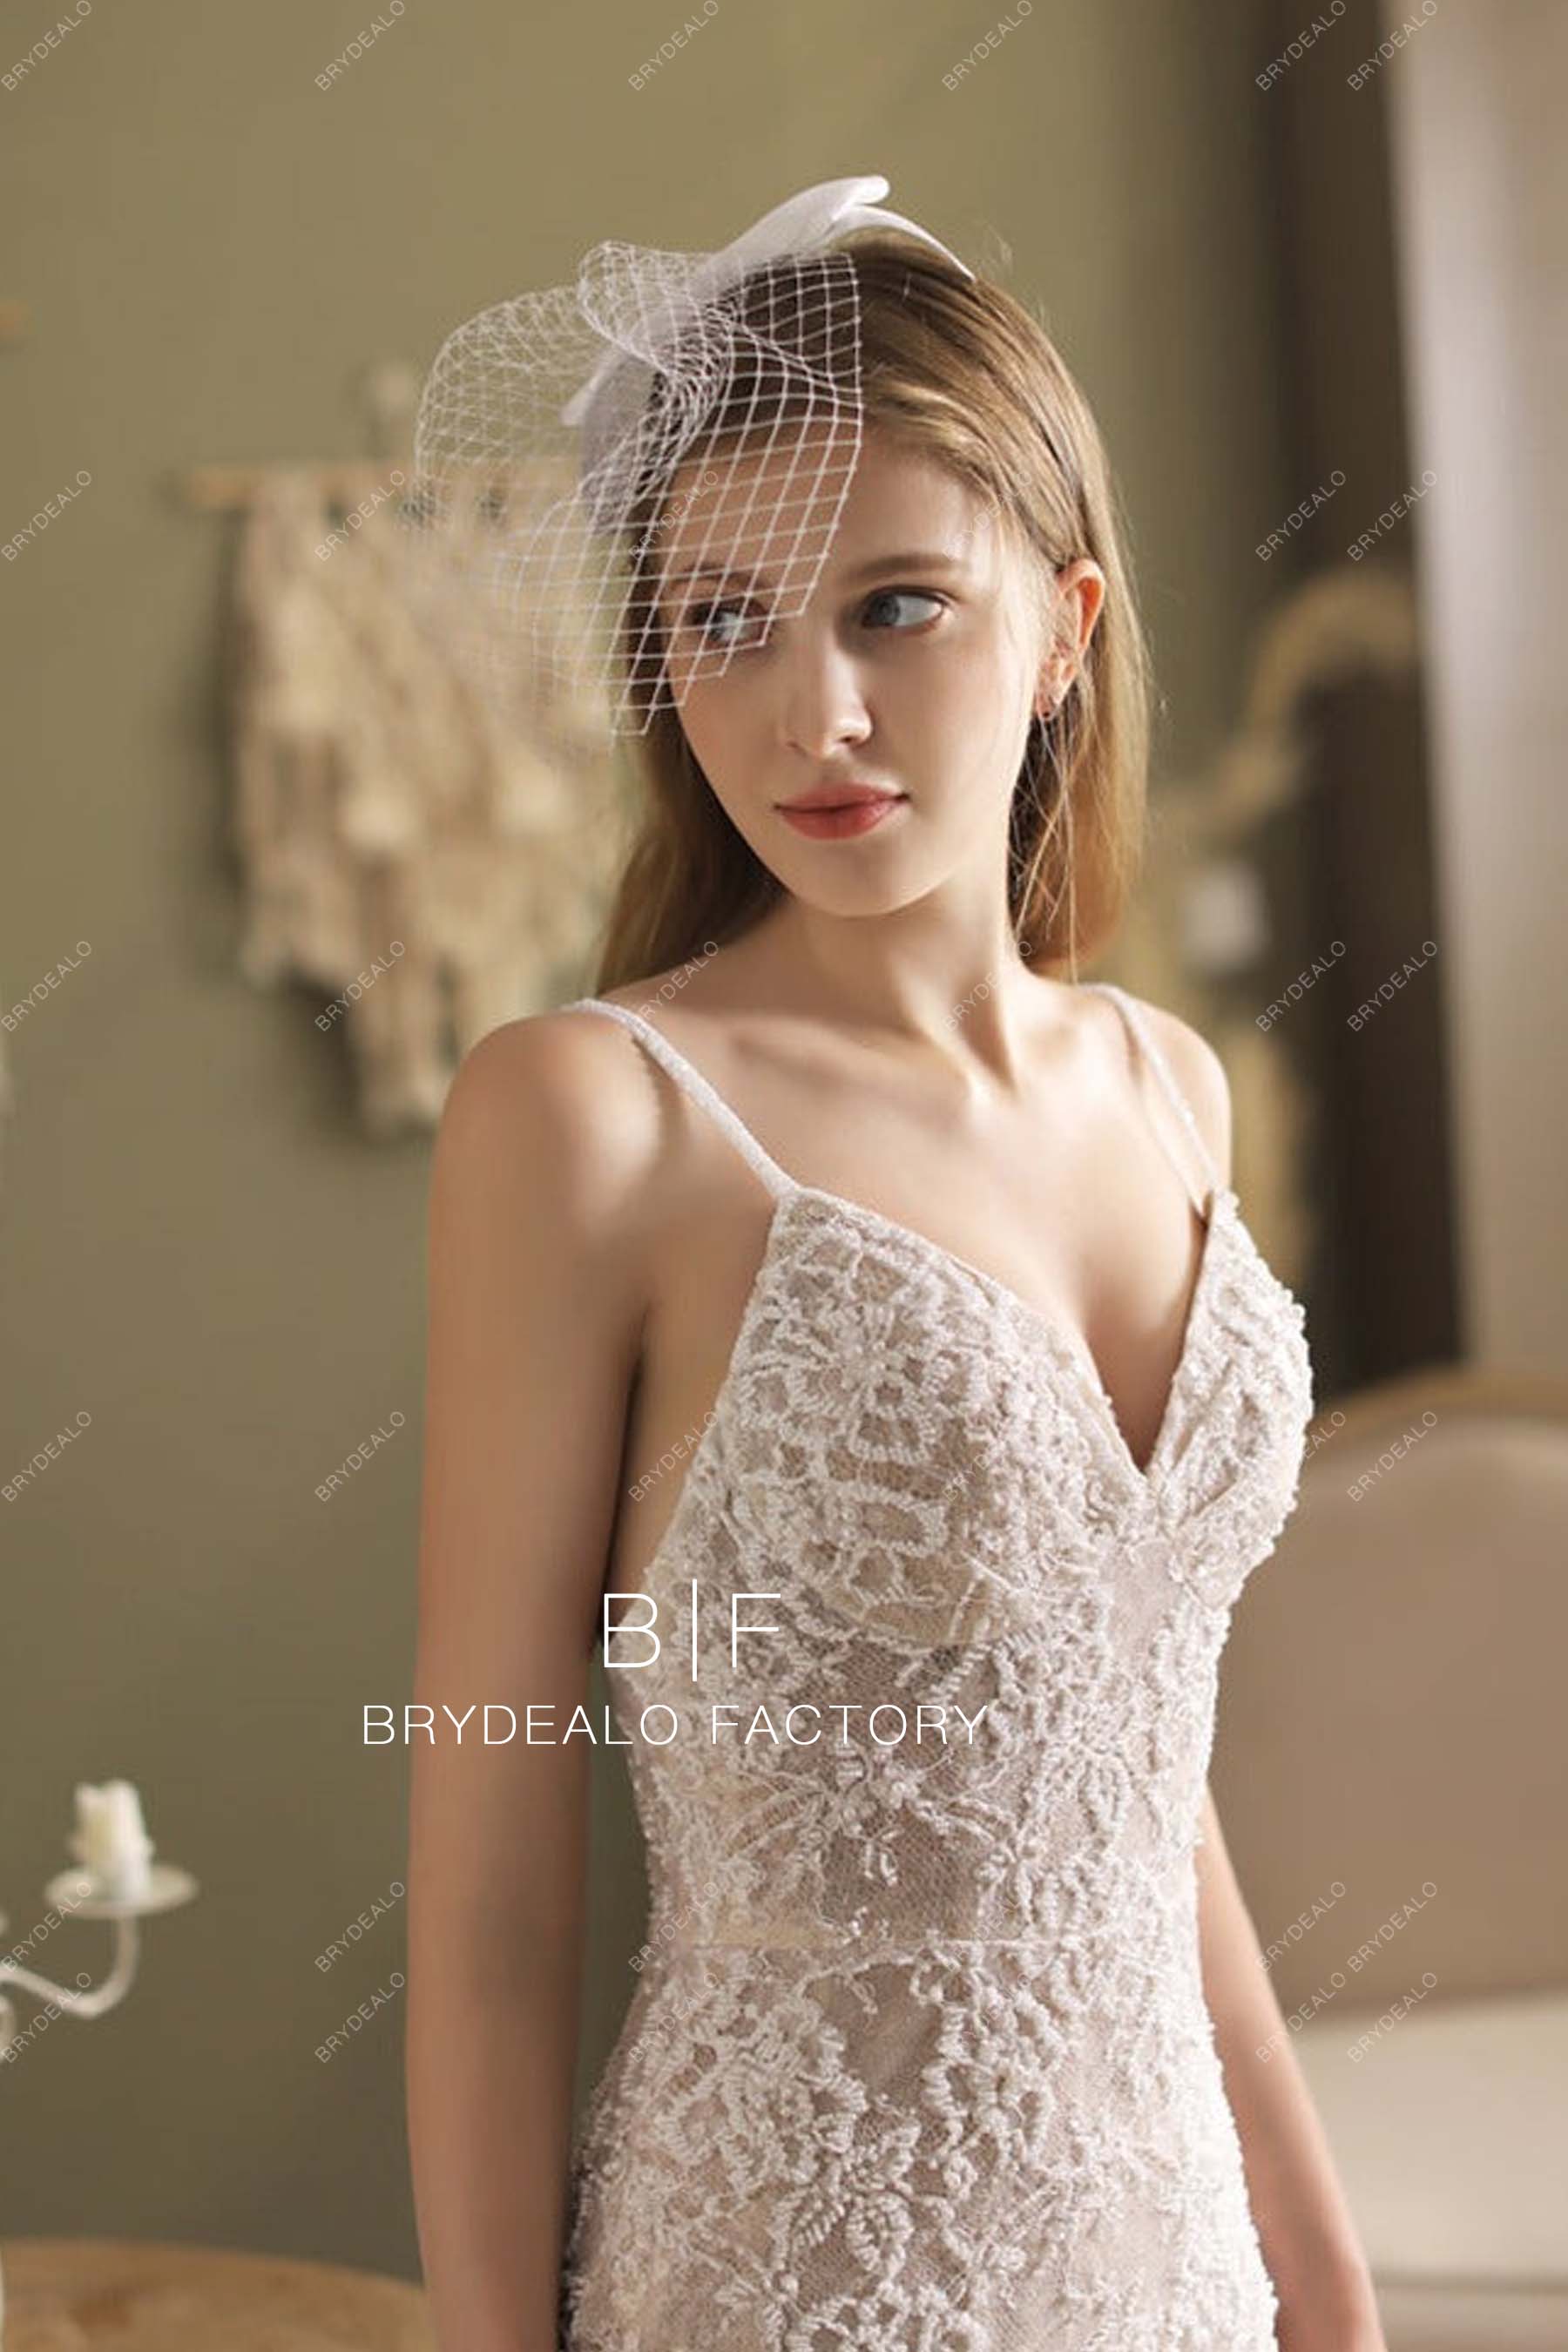 classic bridal birdcage veil